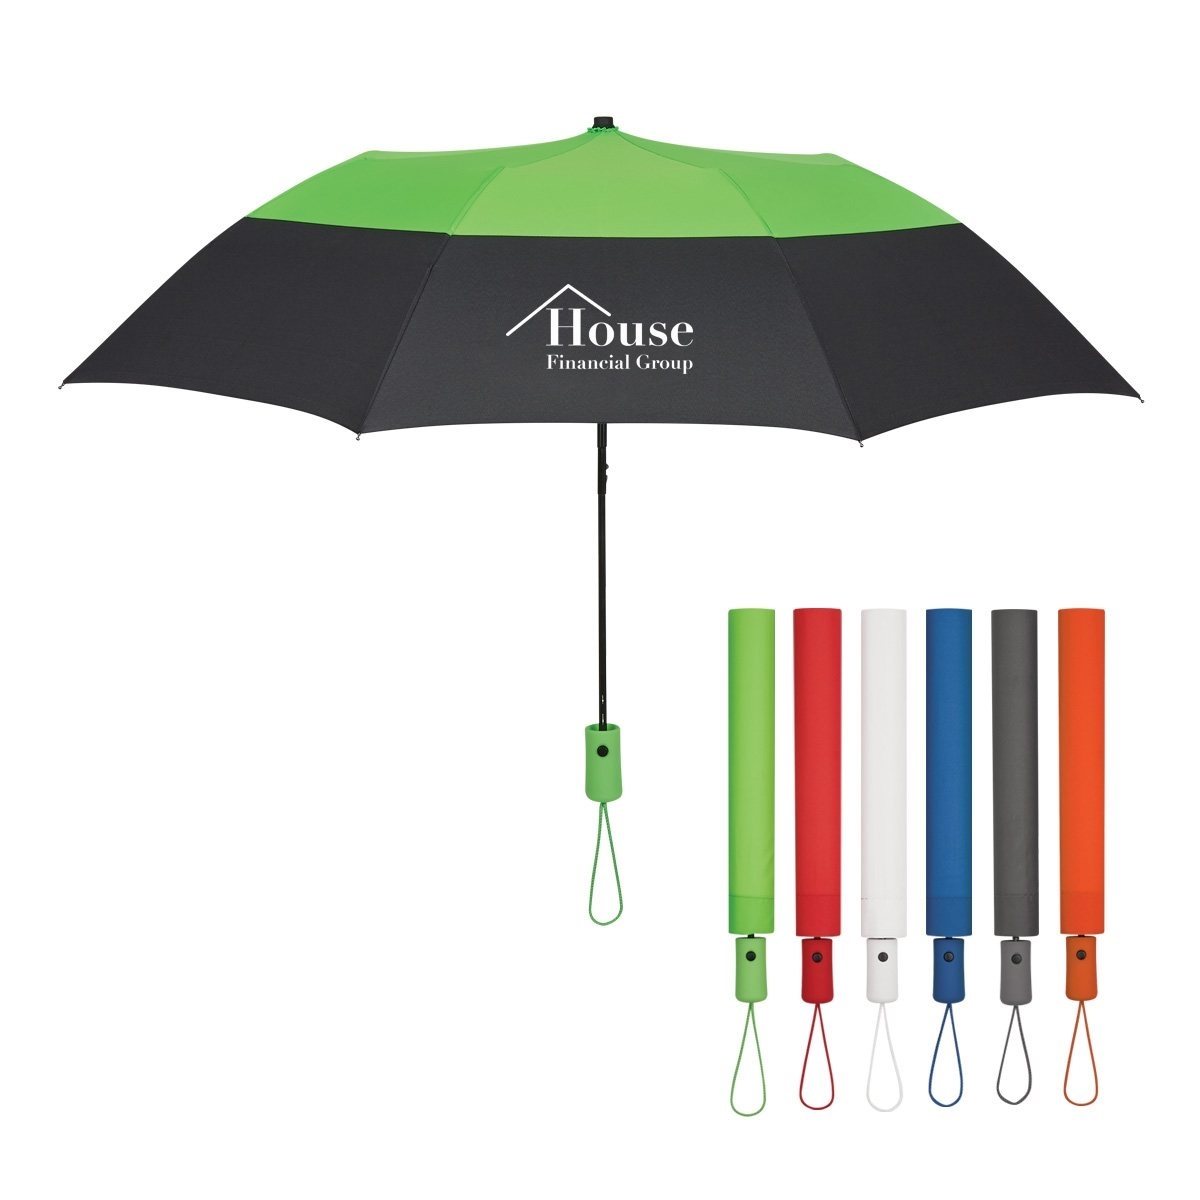 Who Invented the Umbrella?